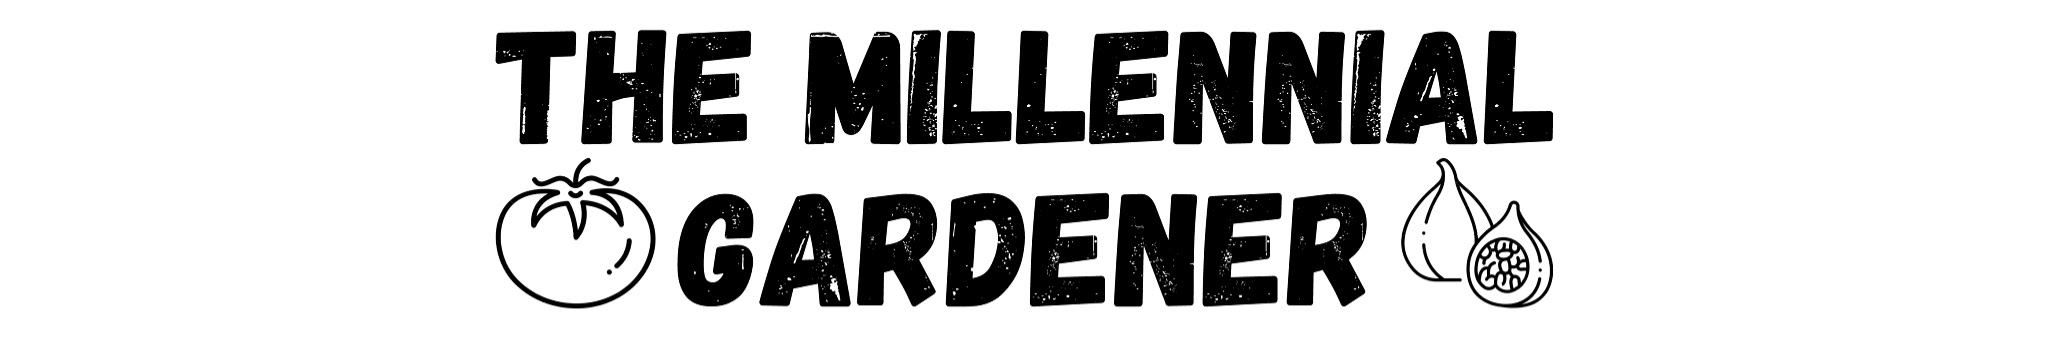 The Millennial Gardener - On Tuby